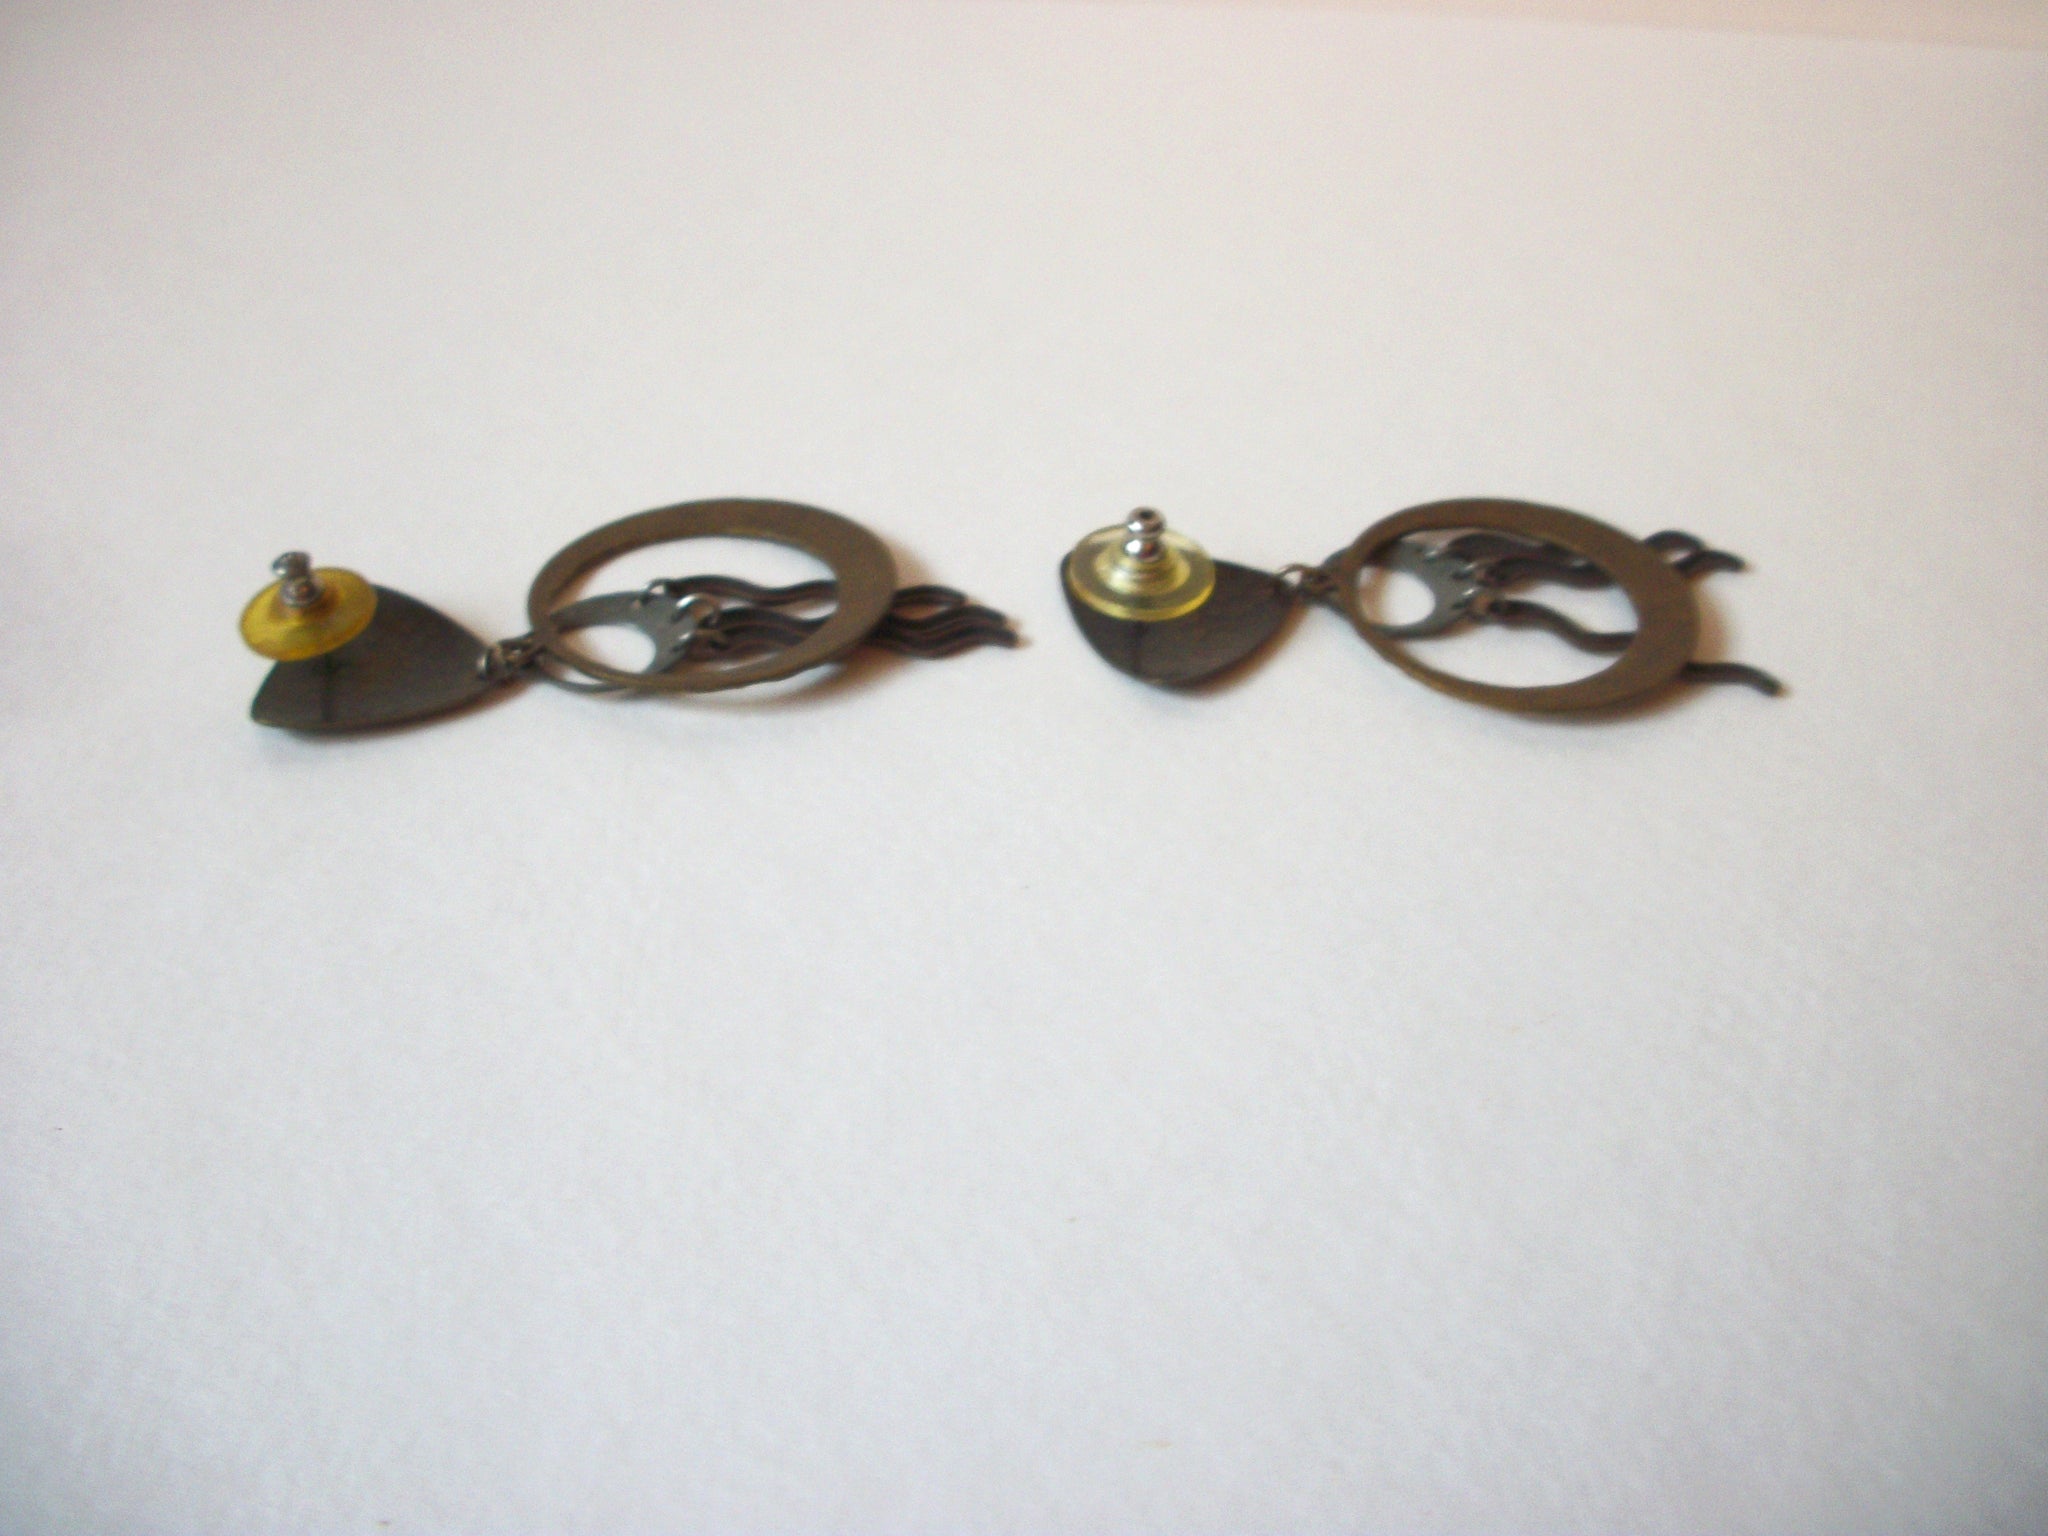 Bohemian Bronze Dangle Earrings 71020